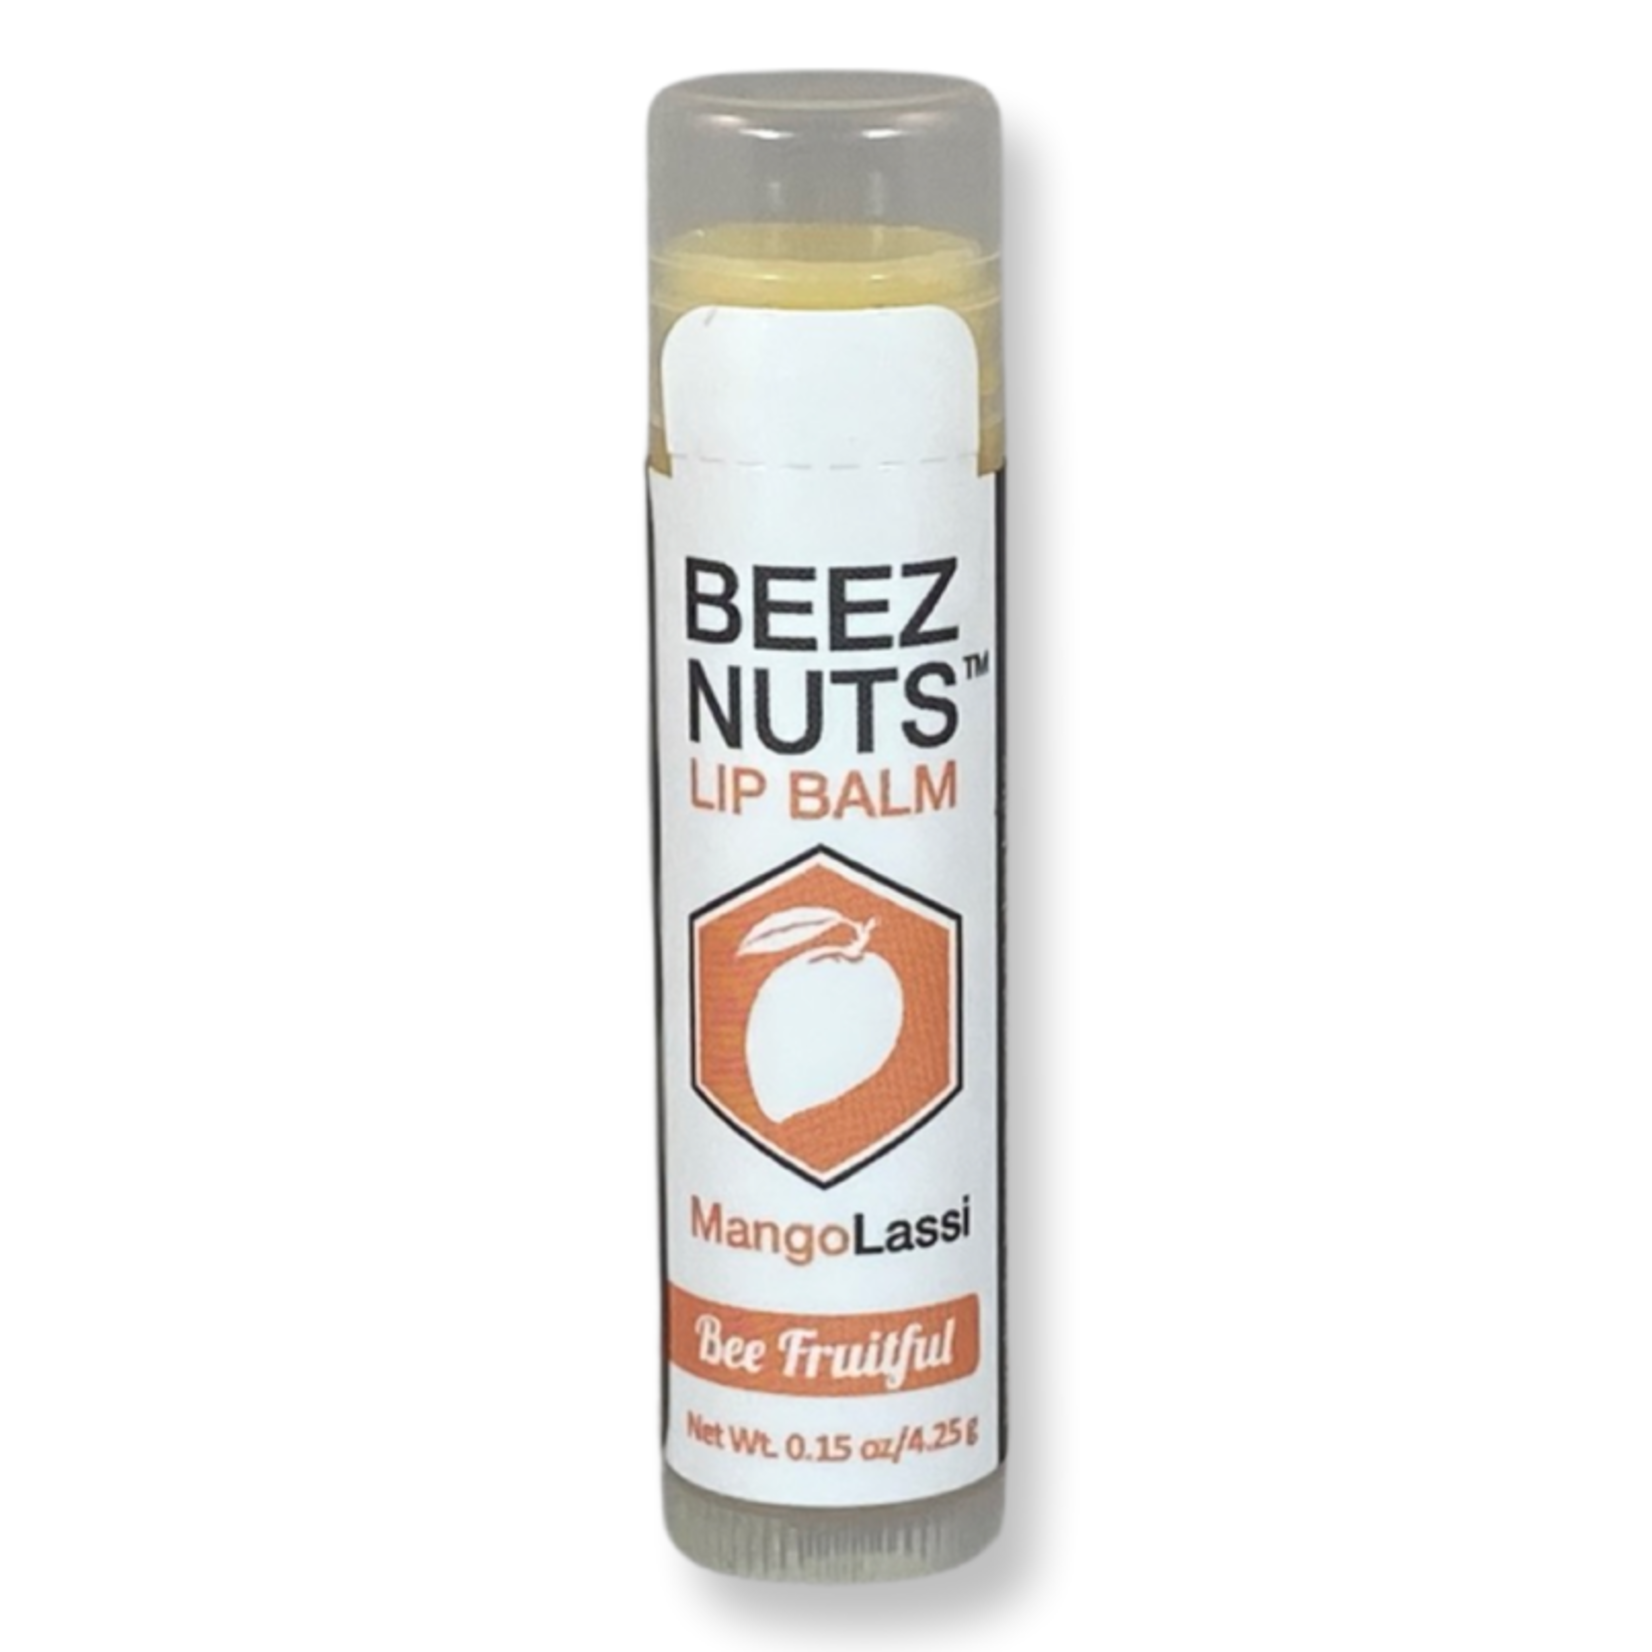 Beez Nuts Lip Balm